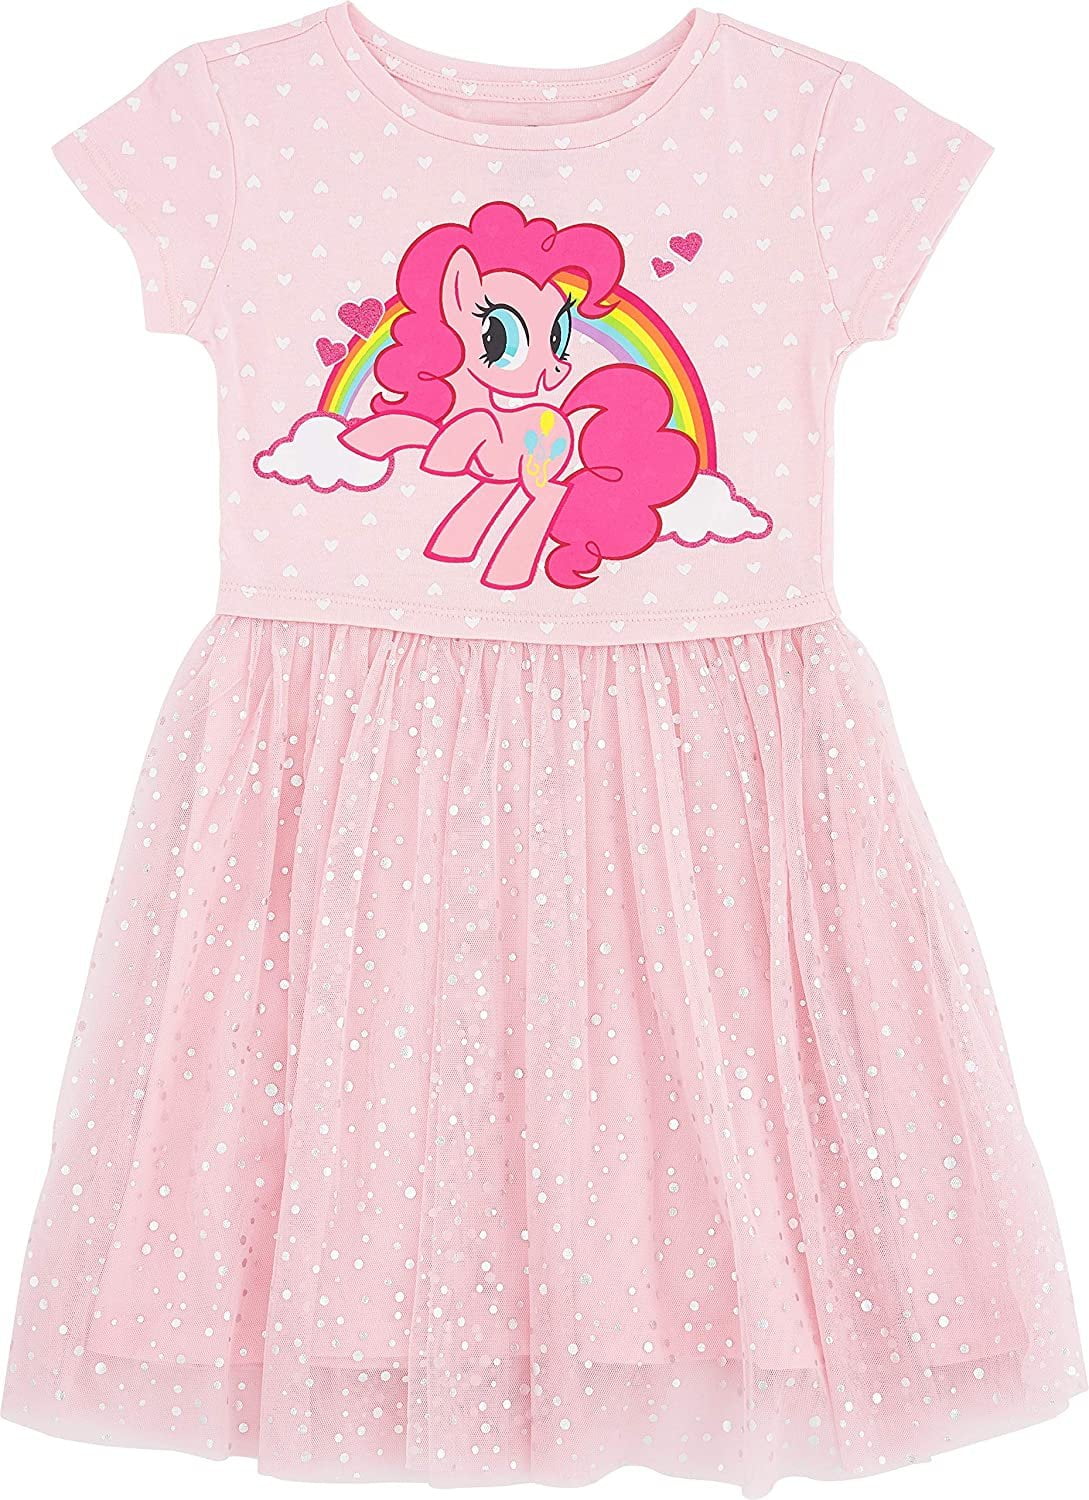 RARE Handmade My Little Pony Dress Toddler/Girls 2T-8Y Bow,Bracelet Doll Dress 